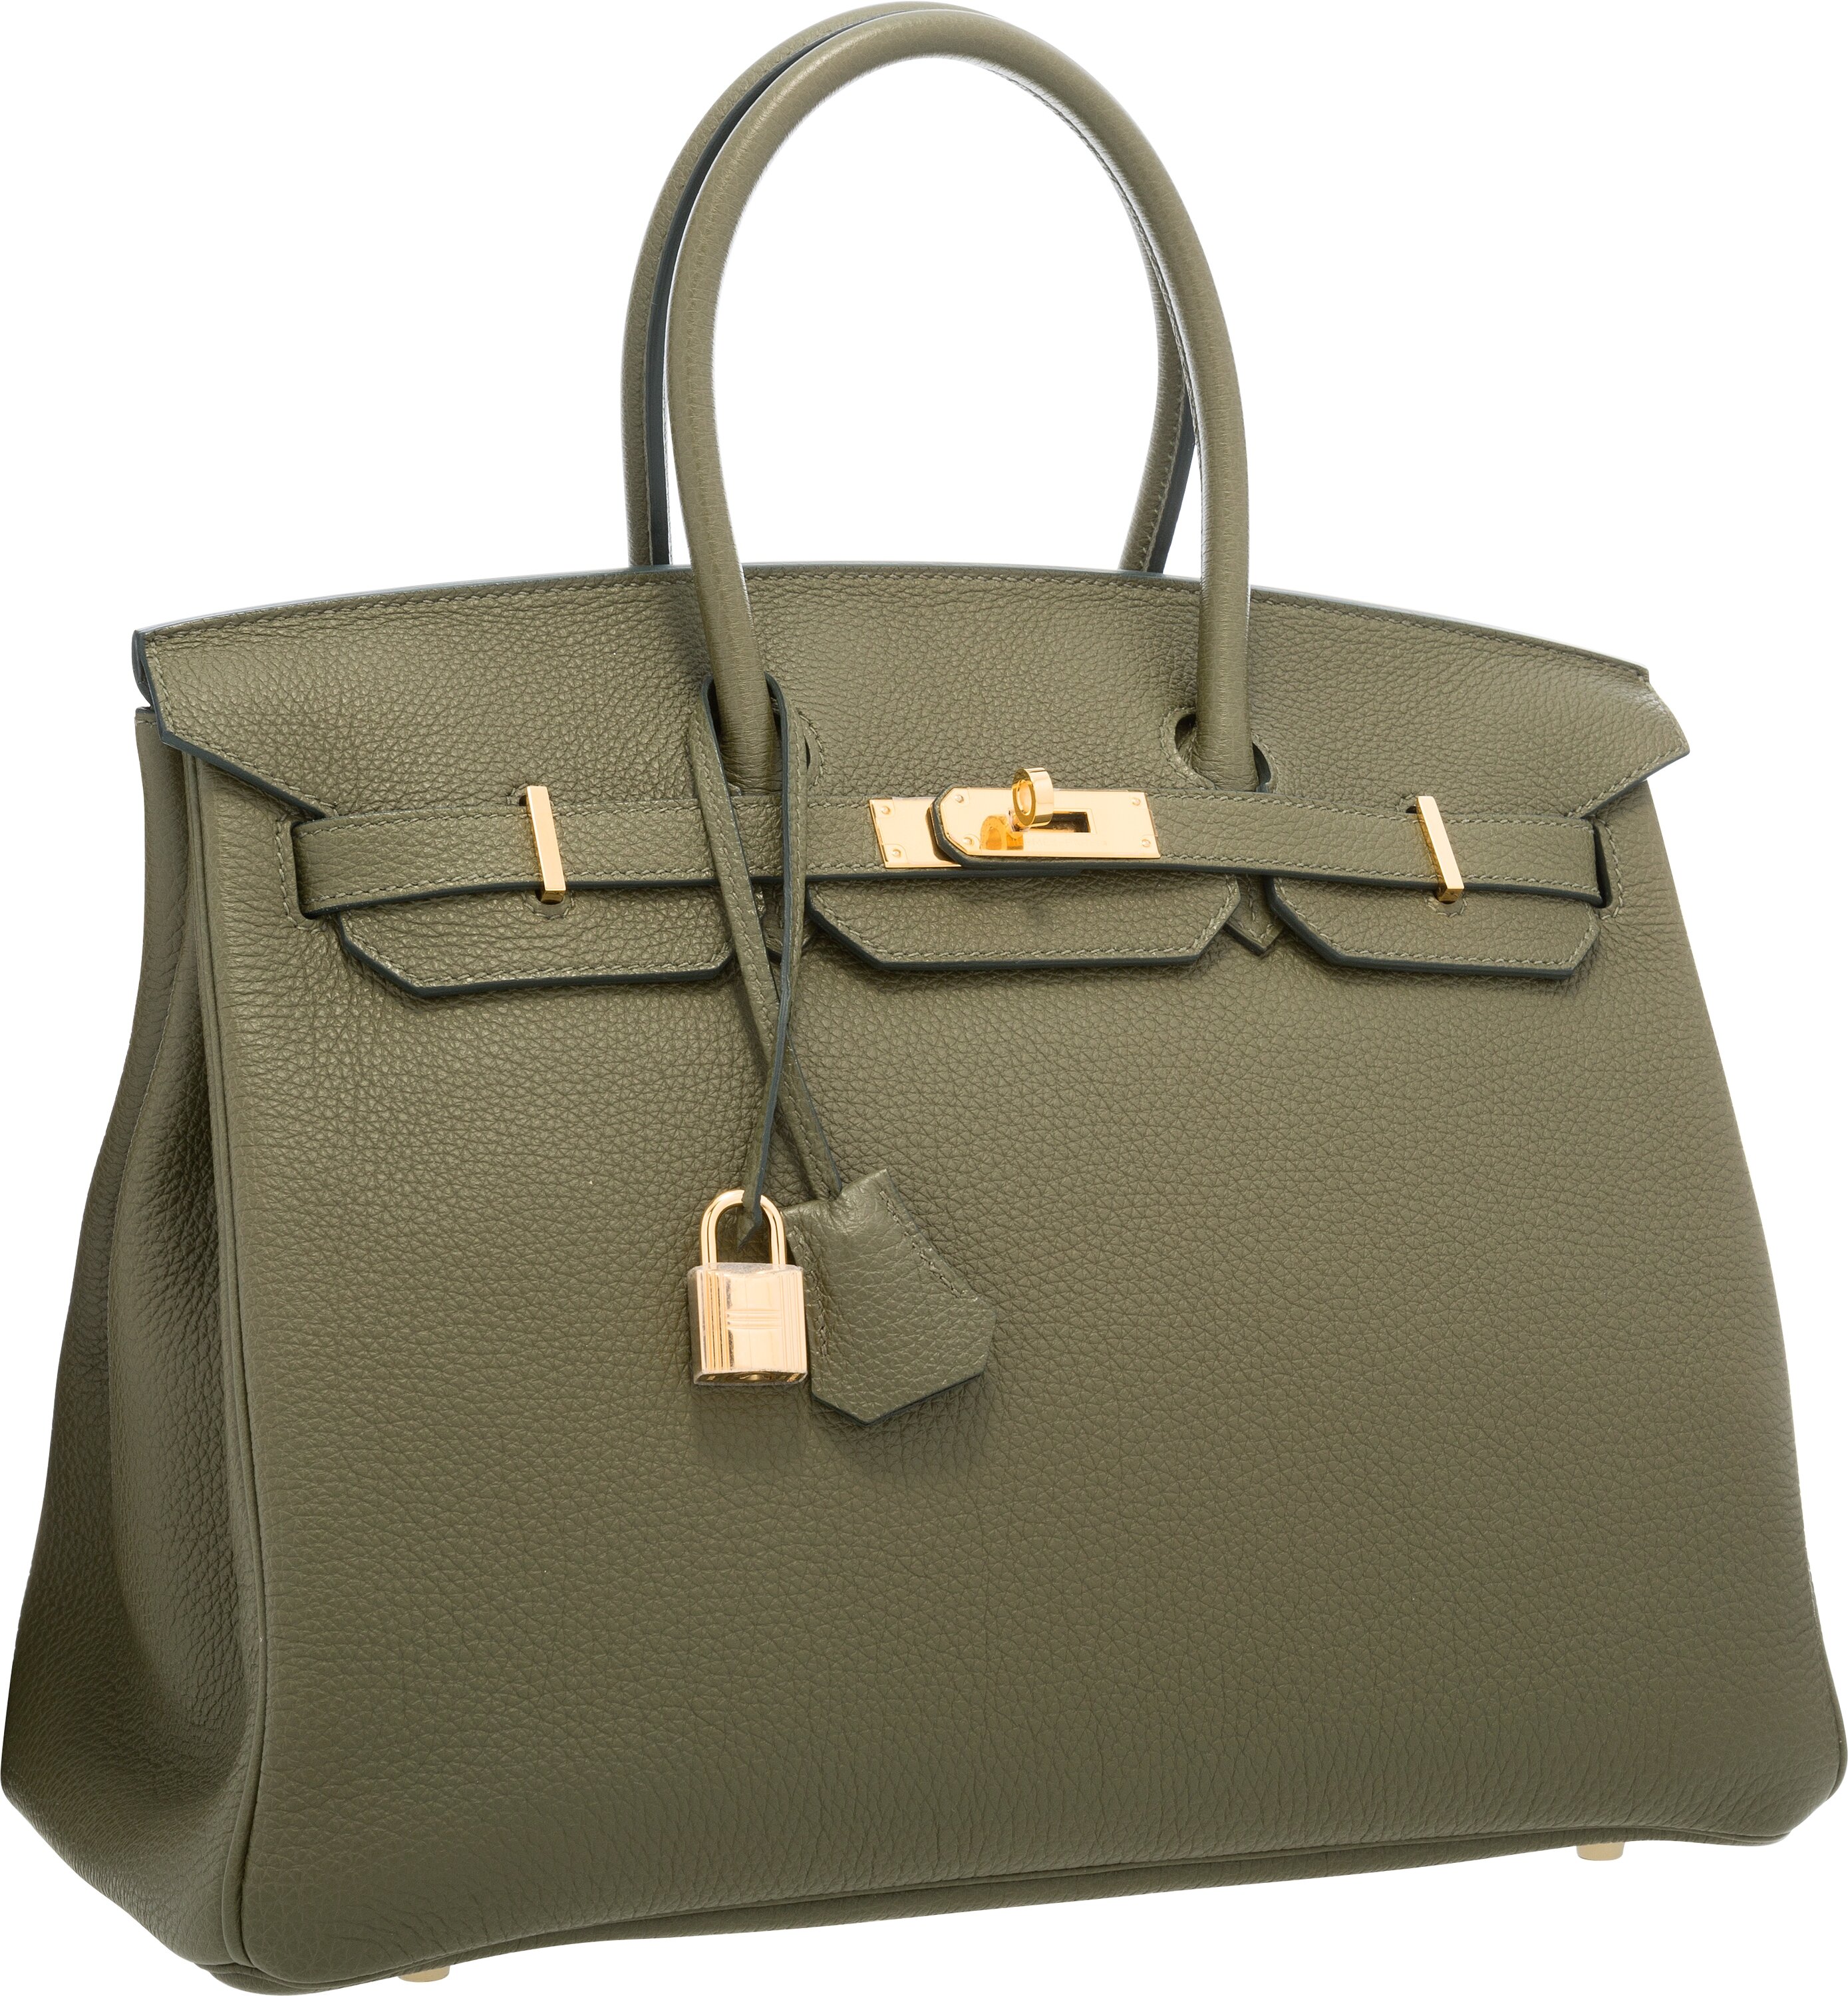 Hermes 35cm Vert Veronese Togo Leather Birkin Bag with Gold, Lot #56228